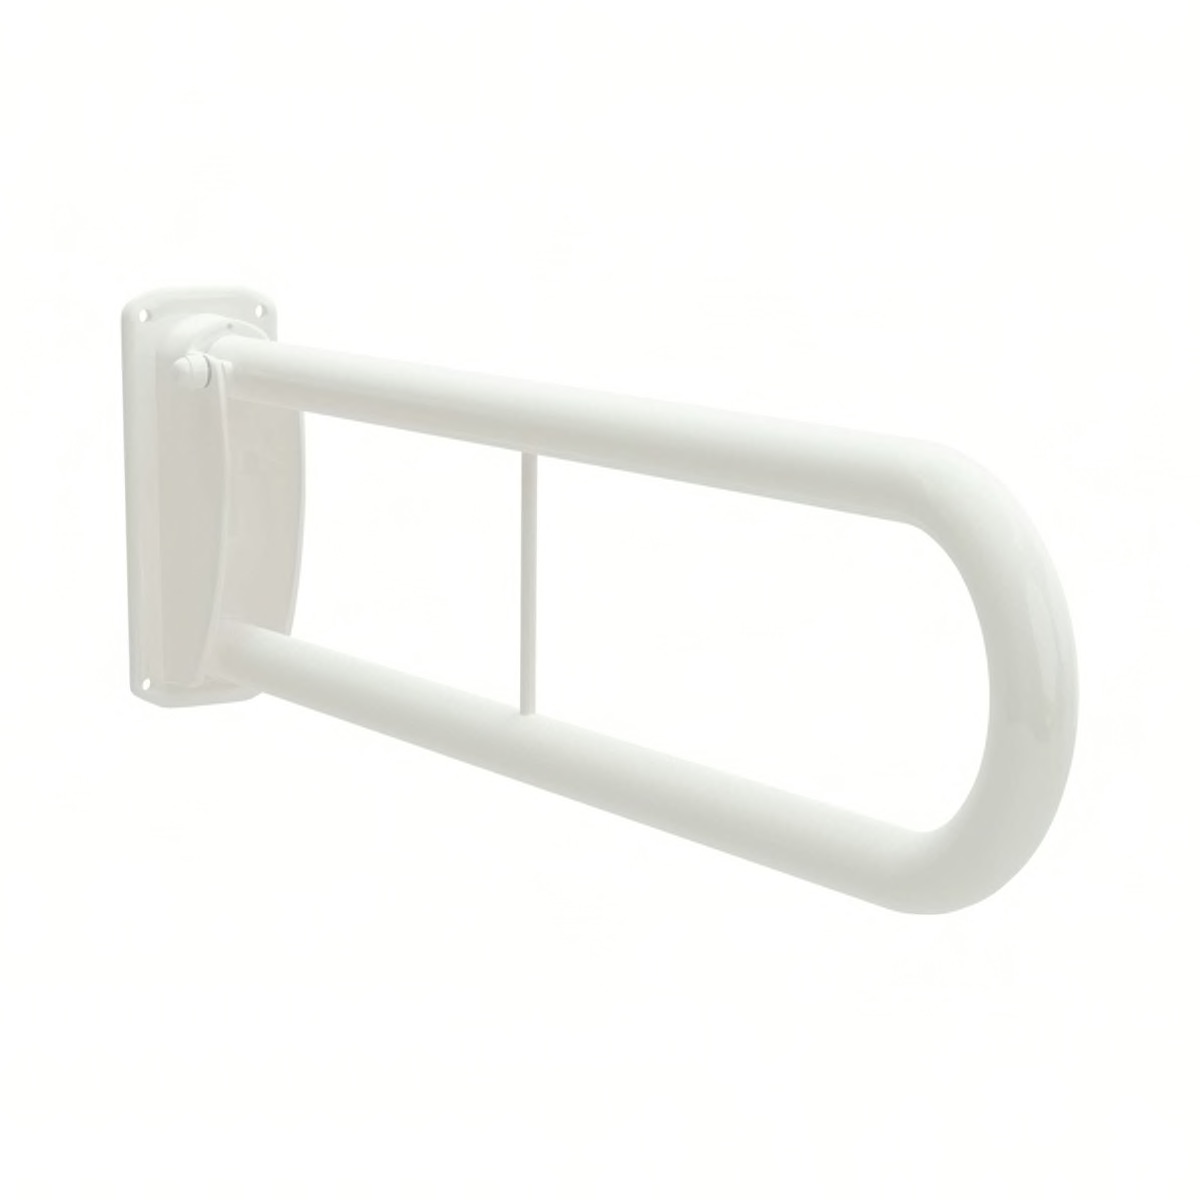 bathex-double-arm-hinged-support-rail-bar-toilet-holder66.jpg